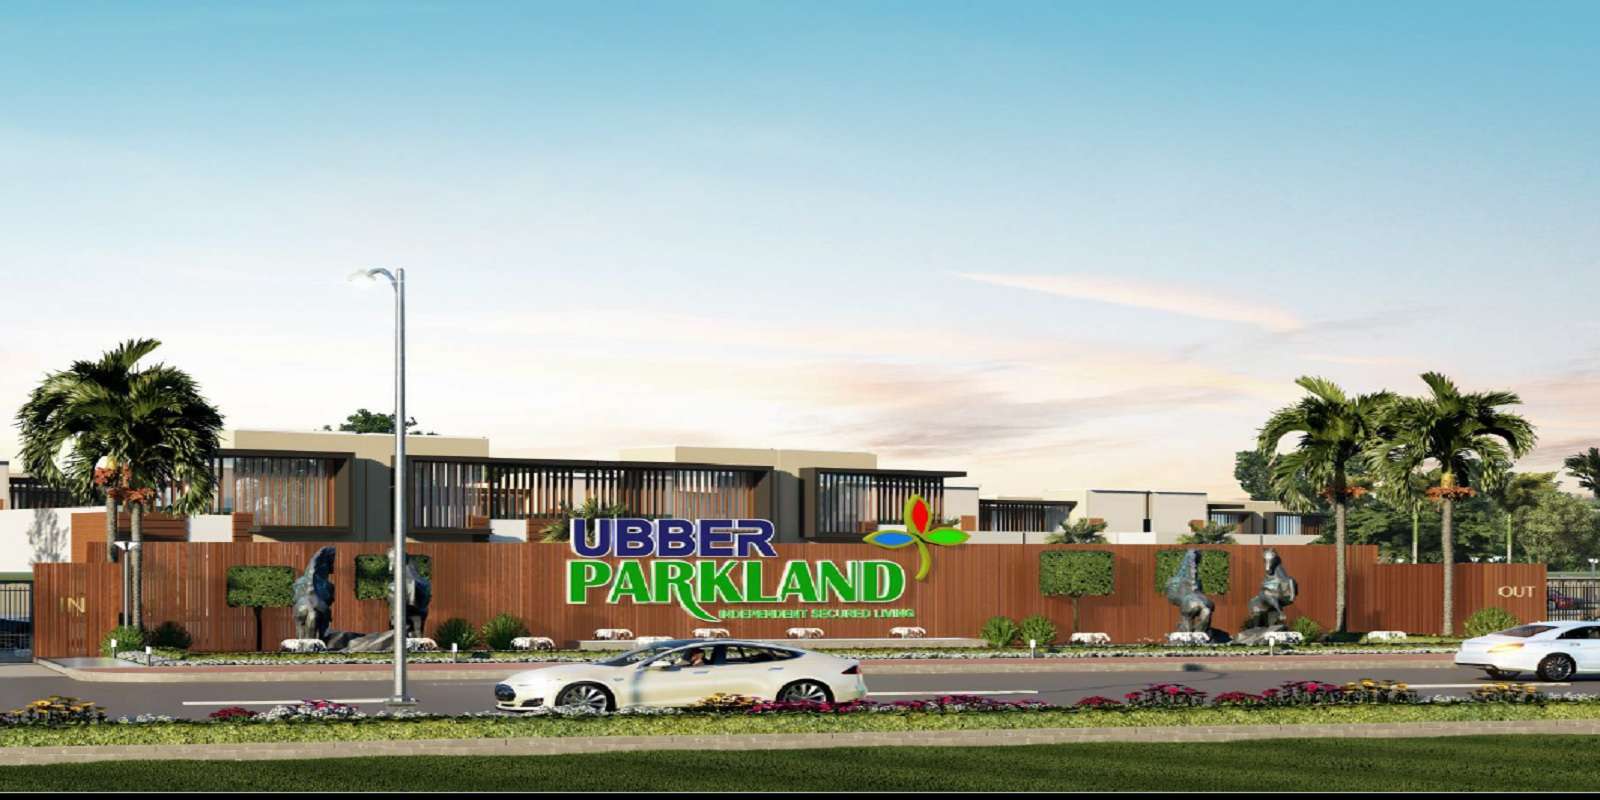 Ubber Parkland Cover Image